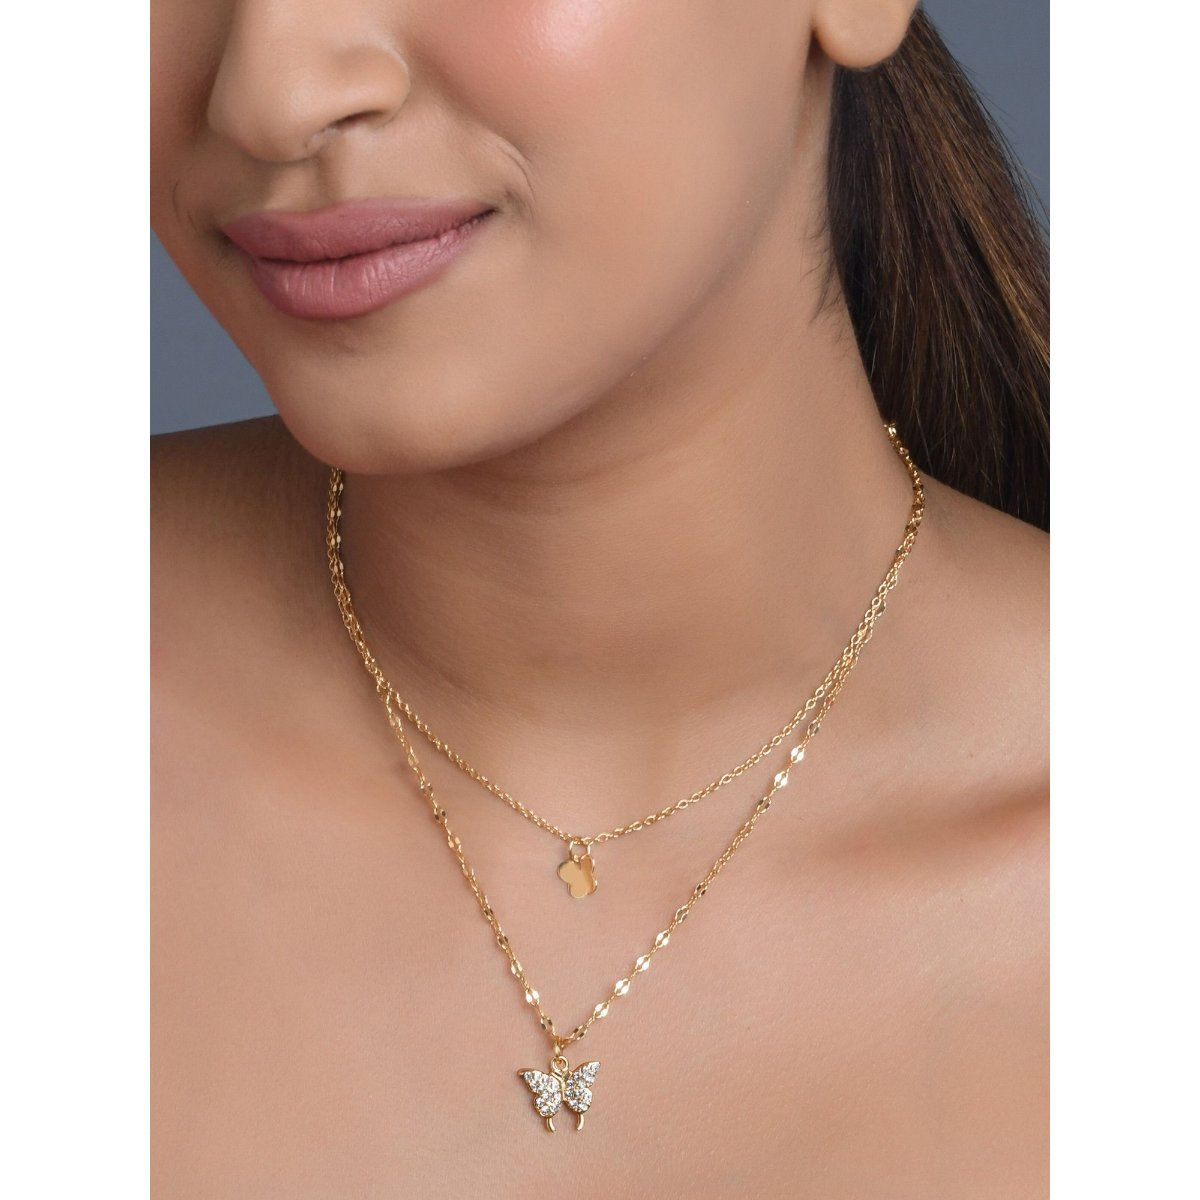 Rhinestone & Butterfly Charm Necklace | SHEIN